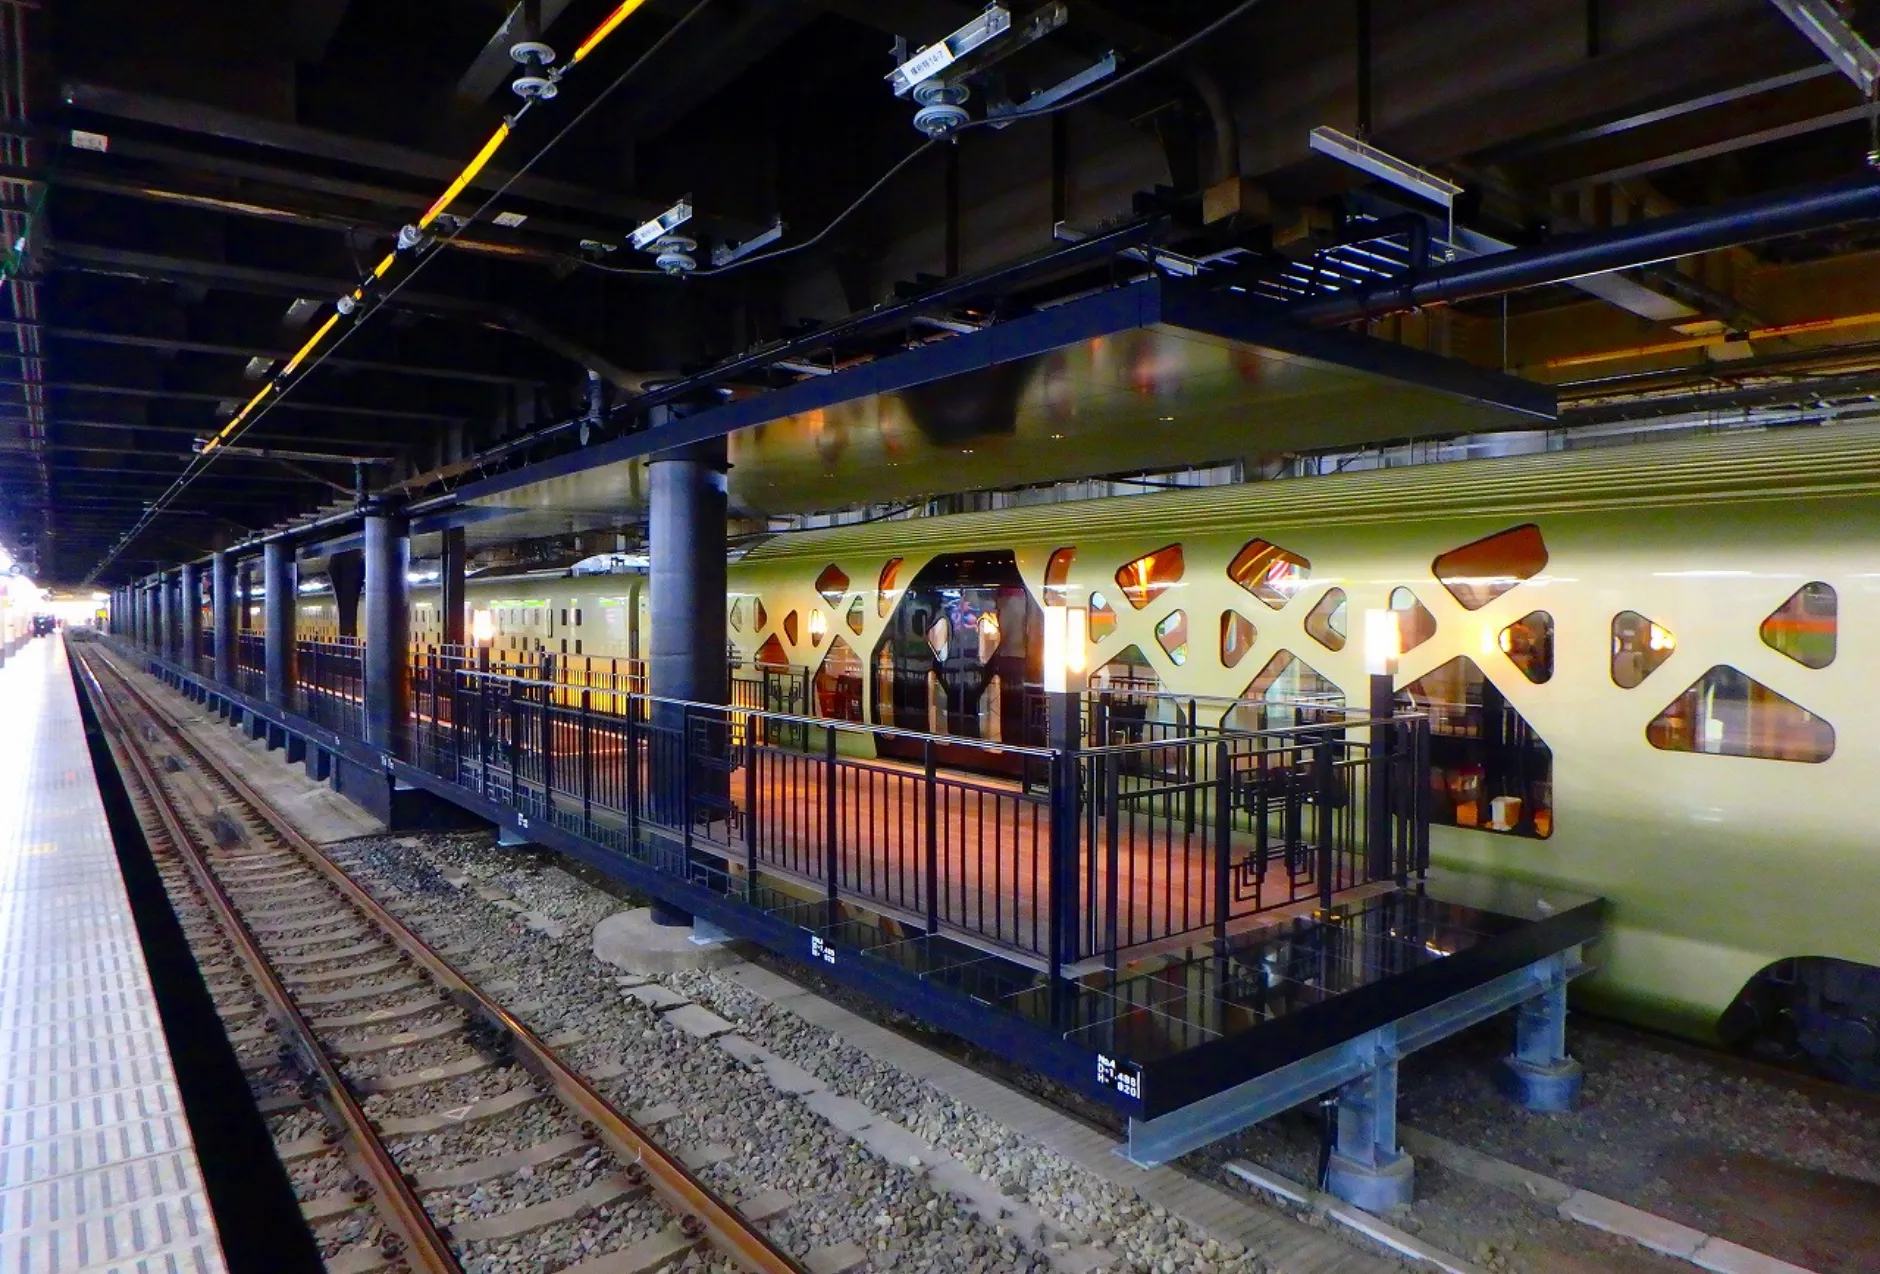 JR東北本線 上野駅構内クルーズトレイン(豪華列車)導入に伴うホーム改良工事のサムネイル画像です